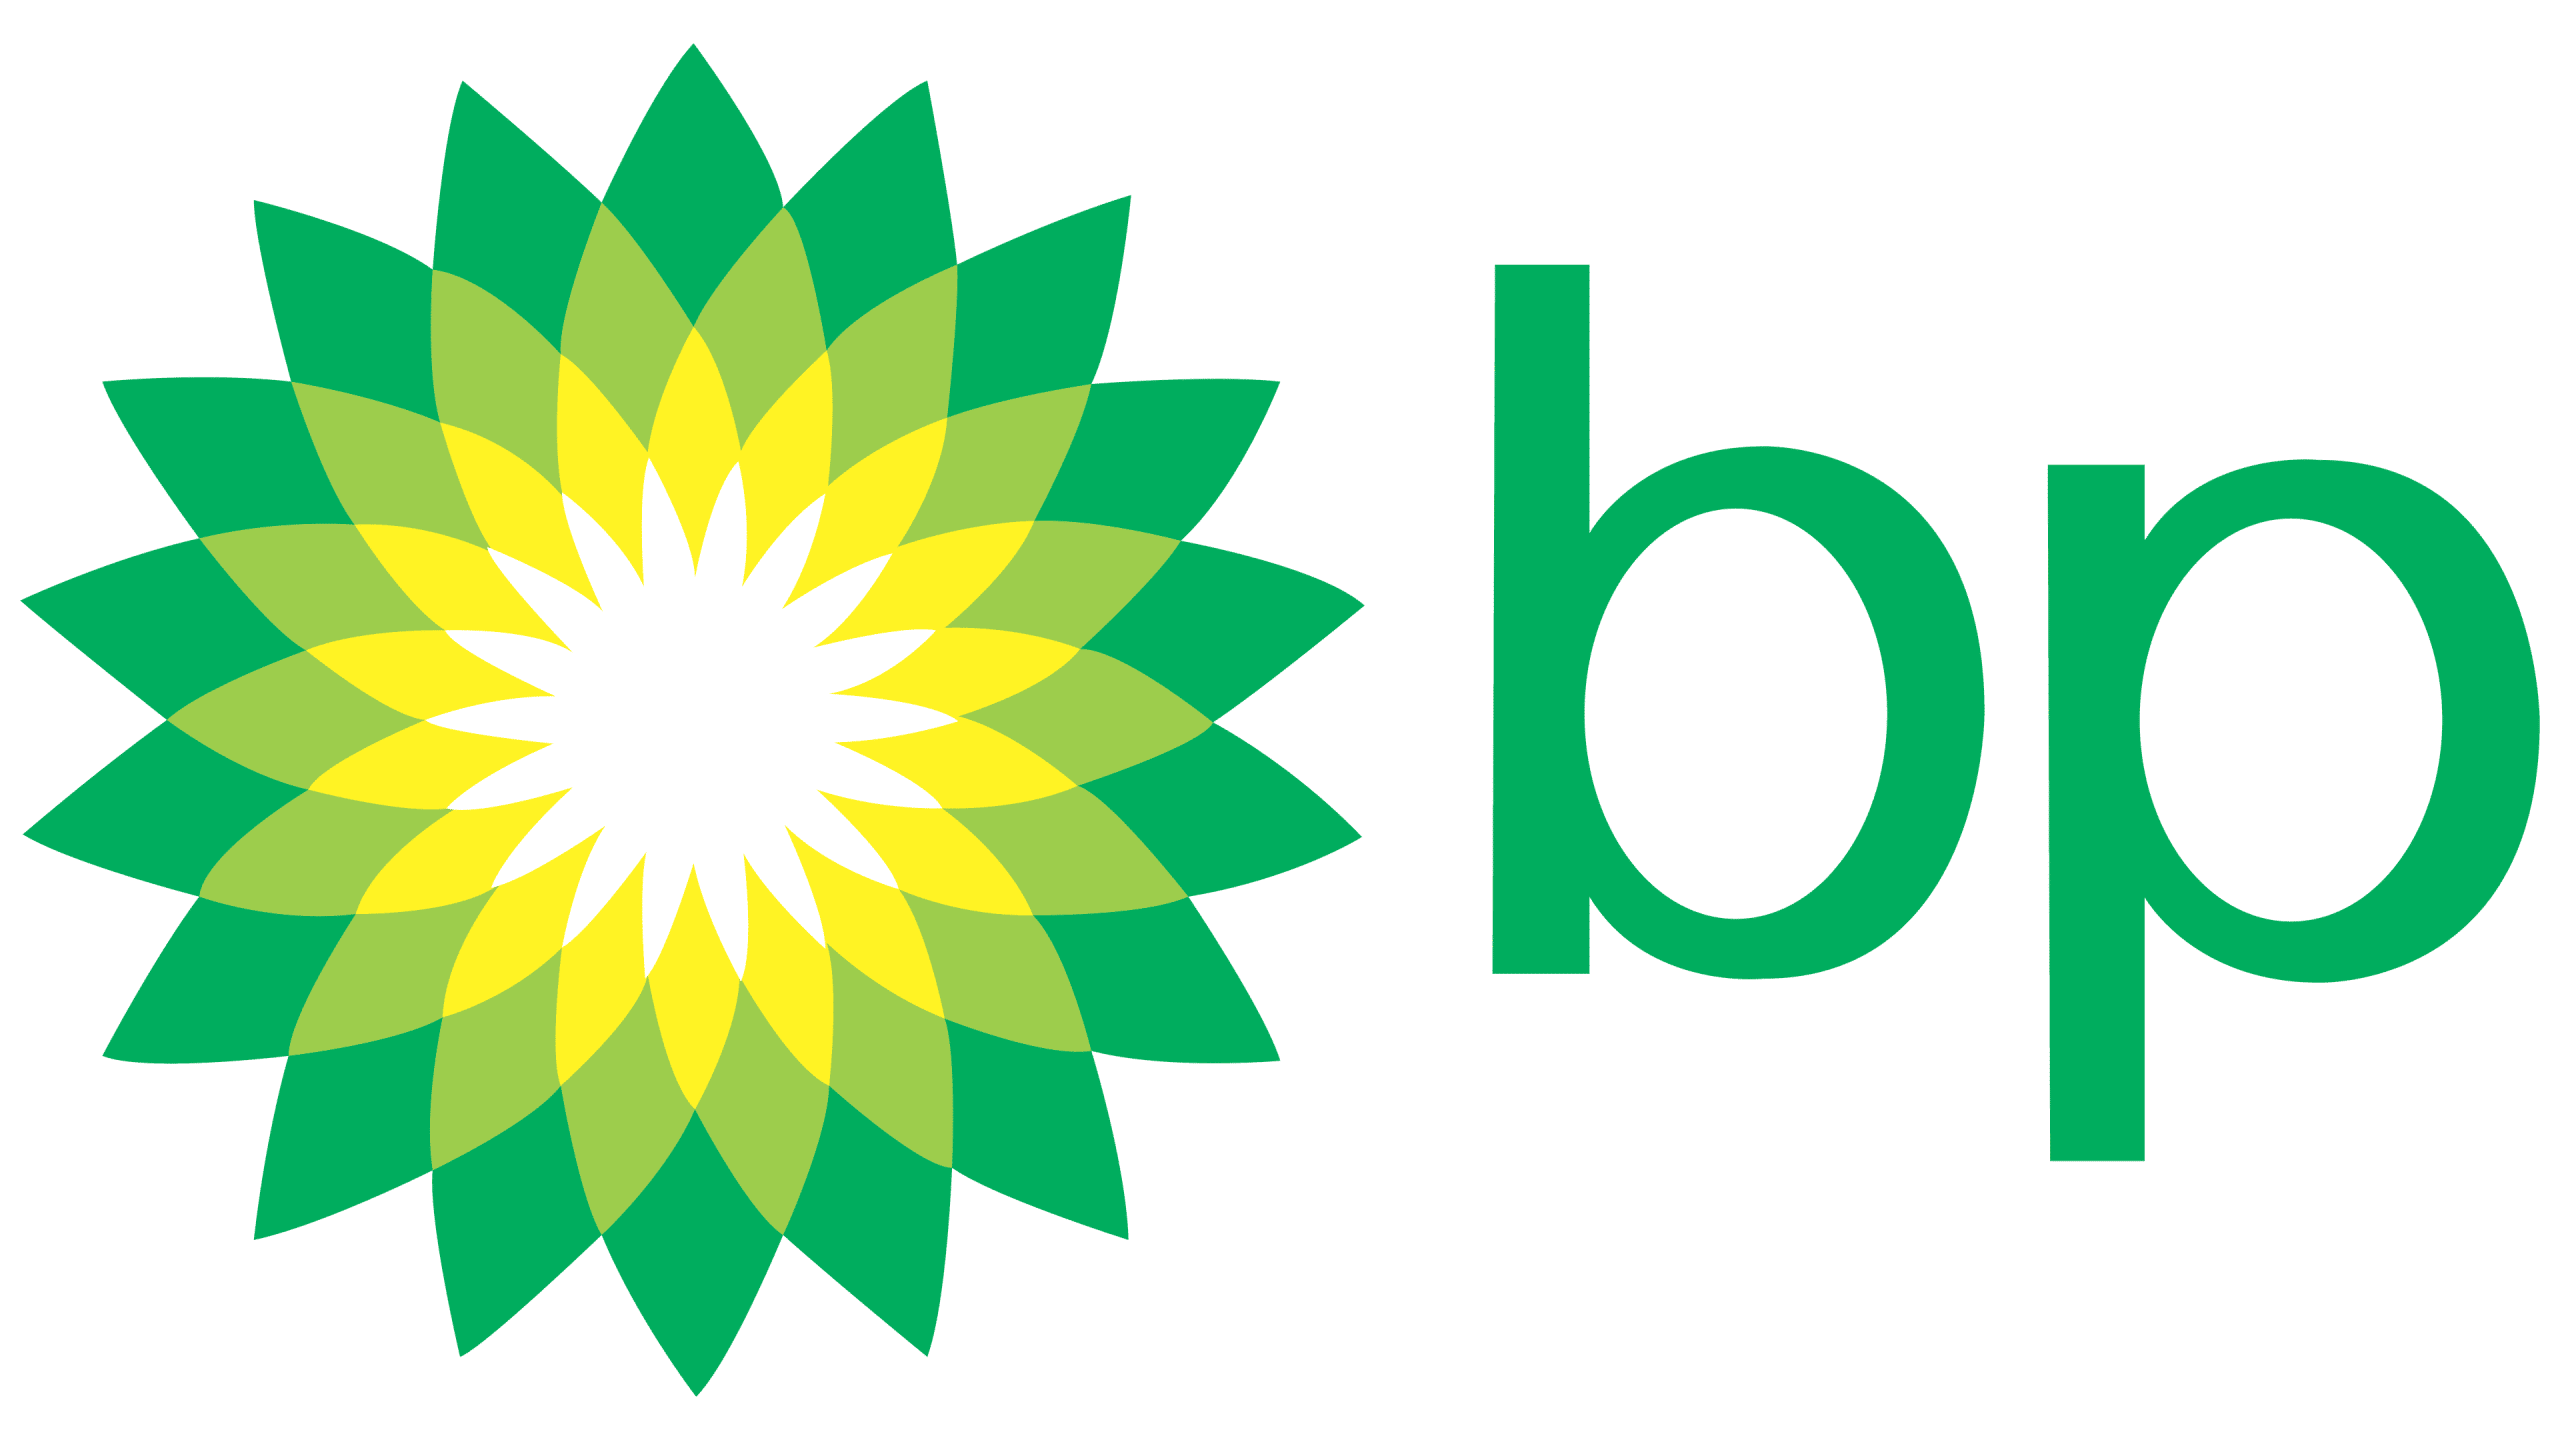 BP-Emblem